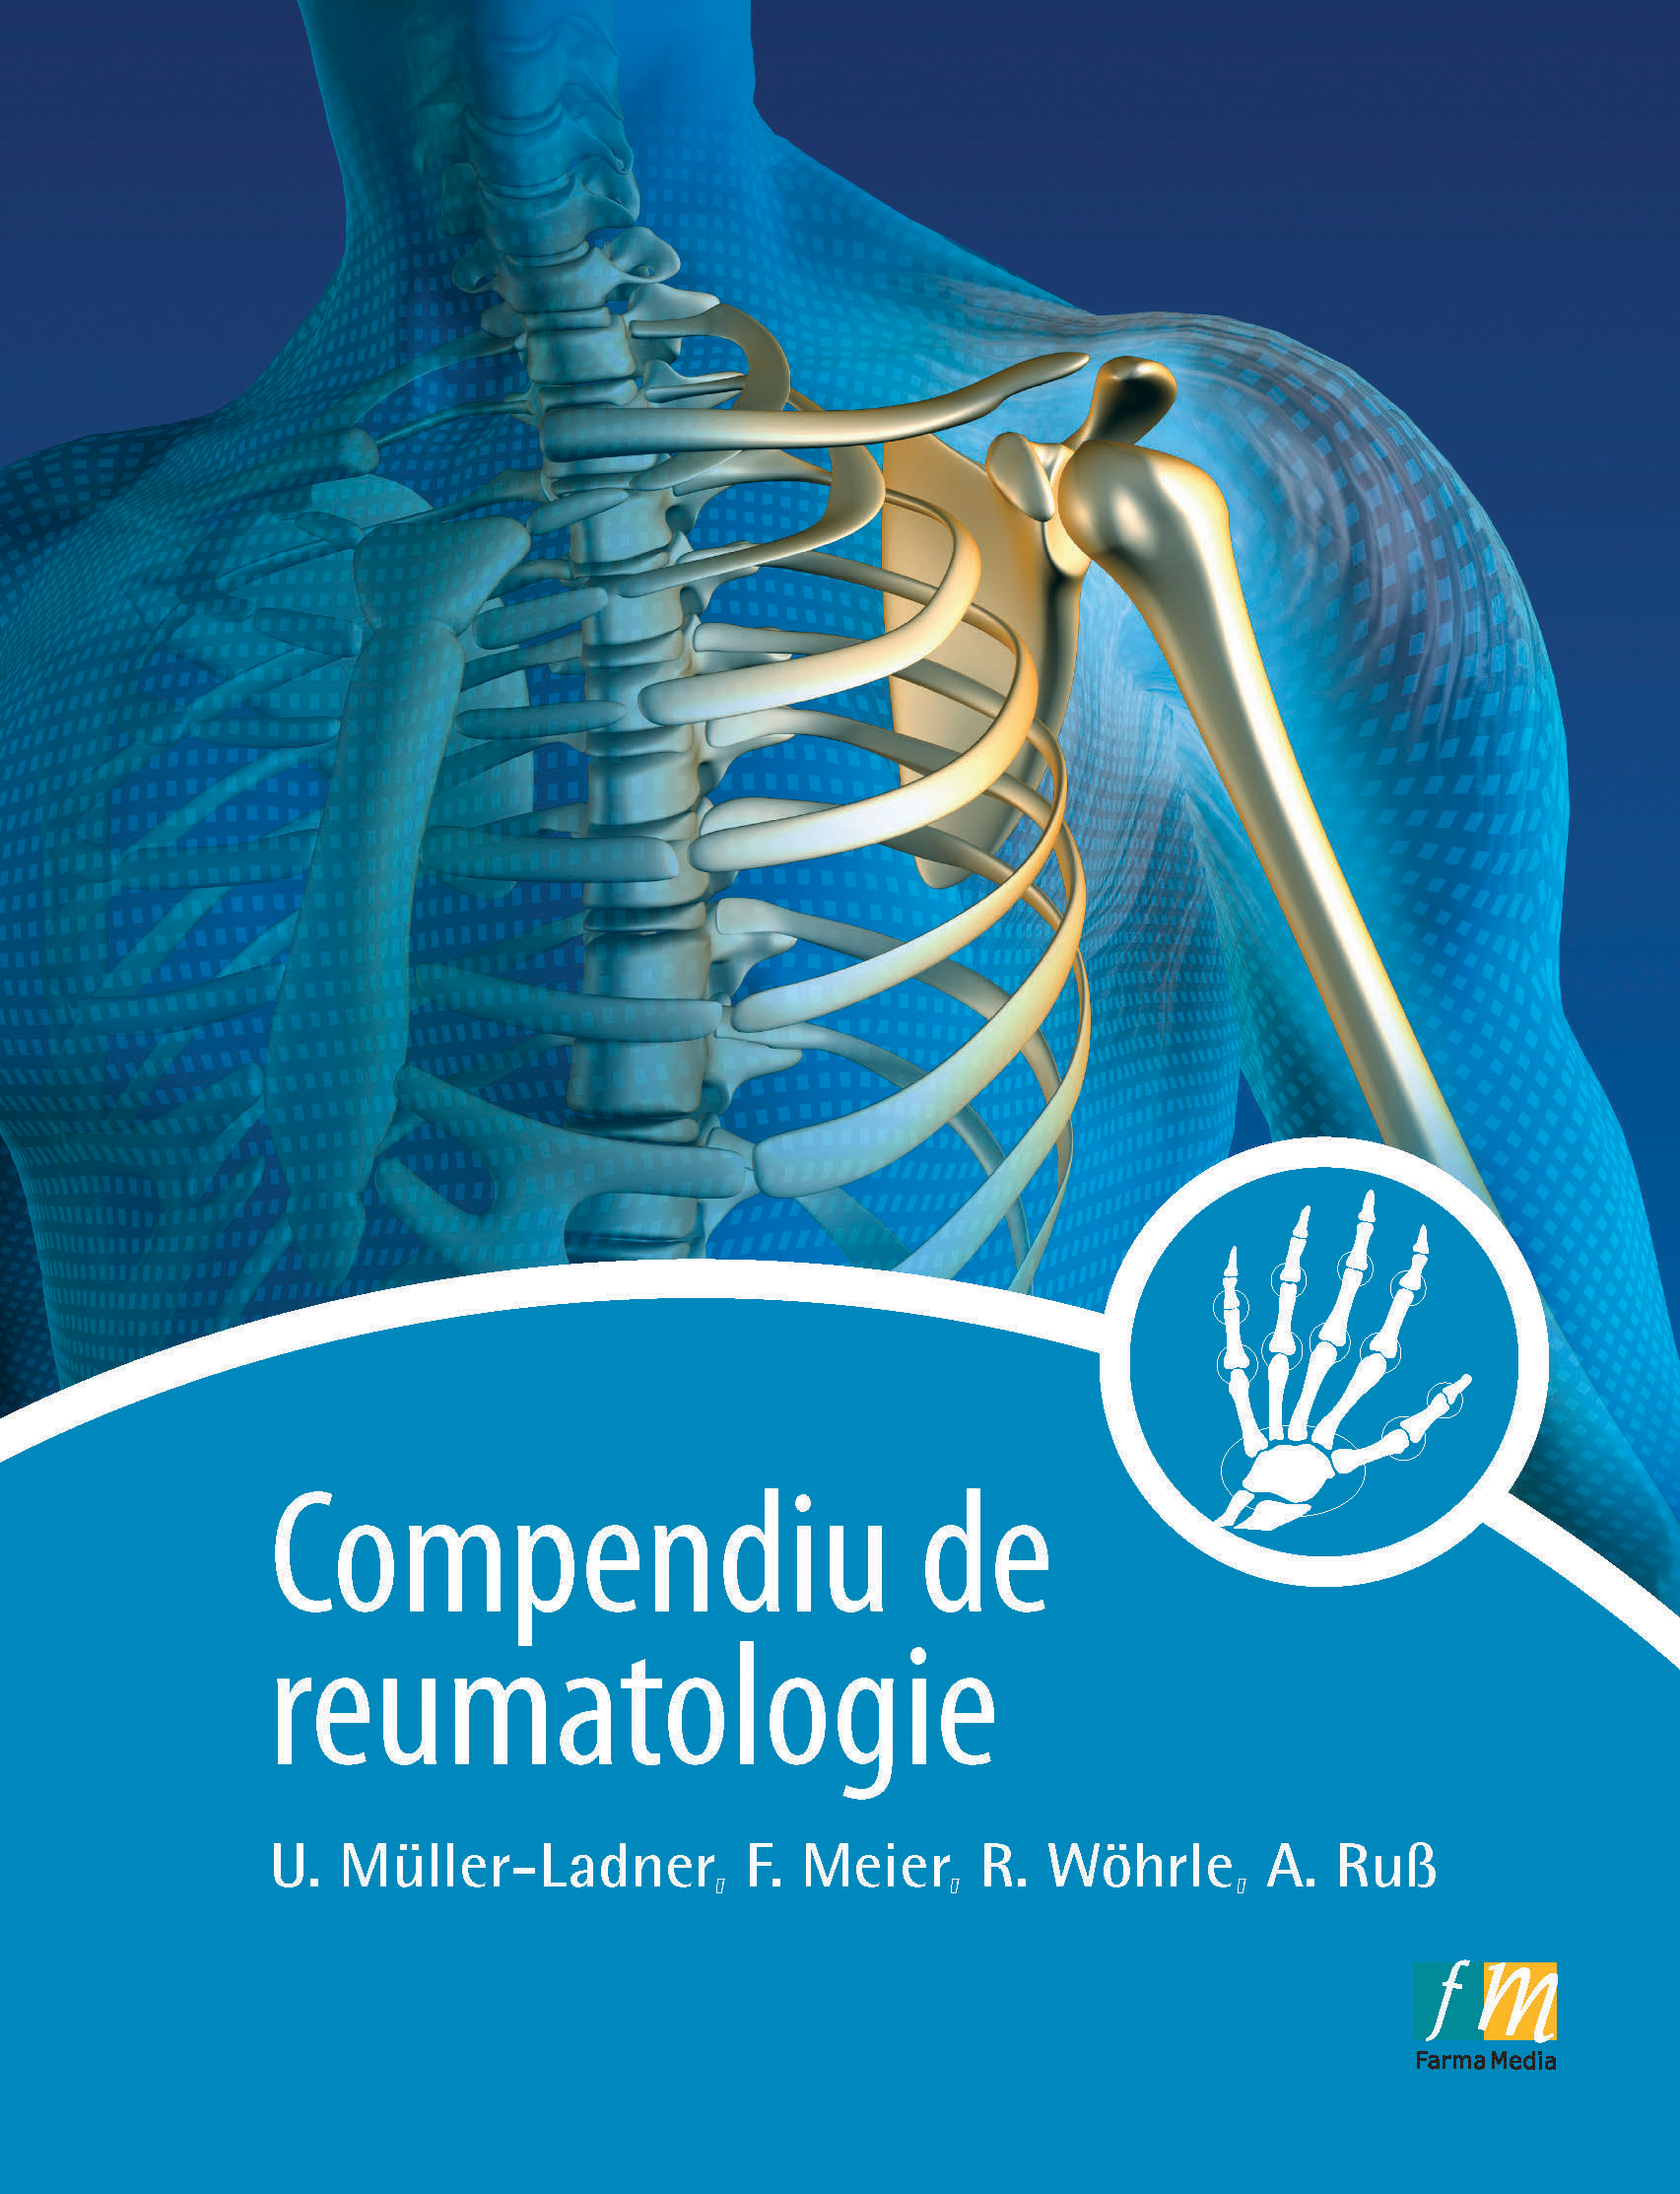 Compendiu De Reumatologie - U. Muller-Ladner, F. Meier, R. Wohrle, A. Rub